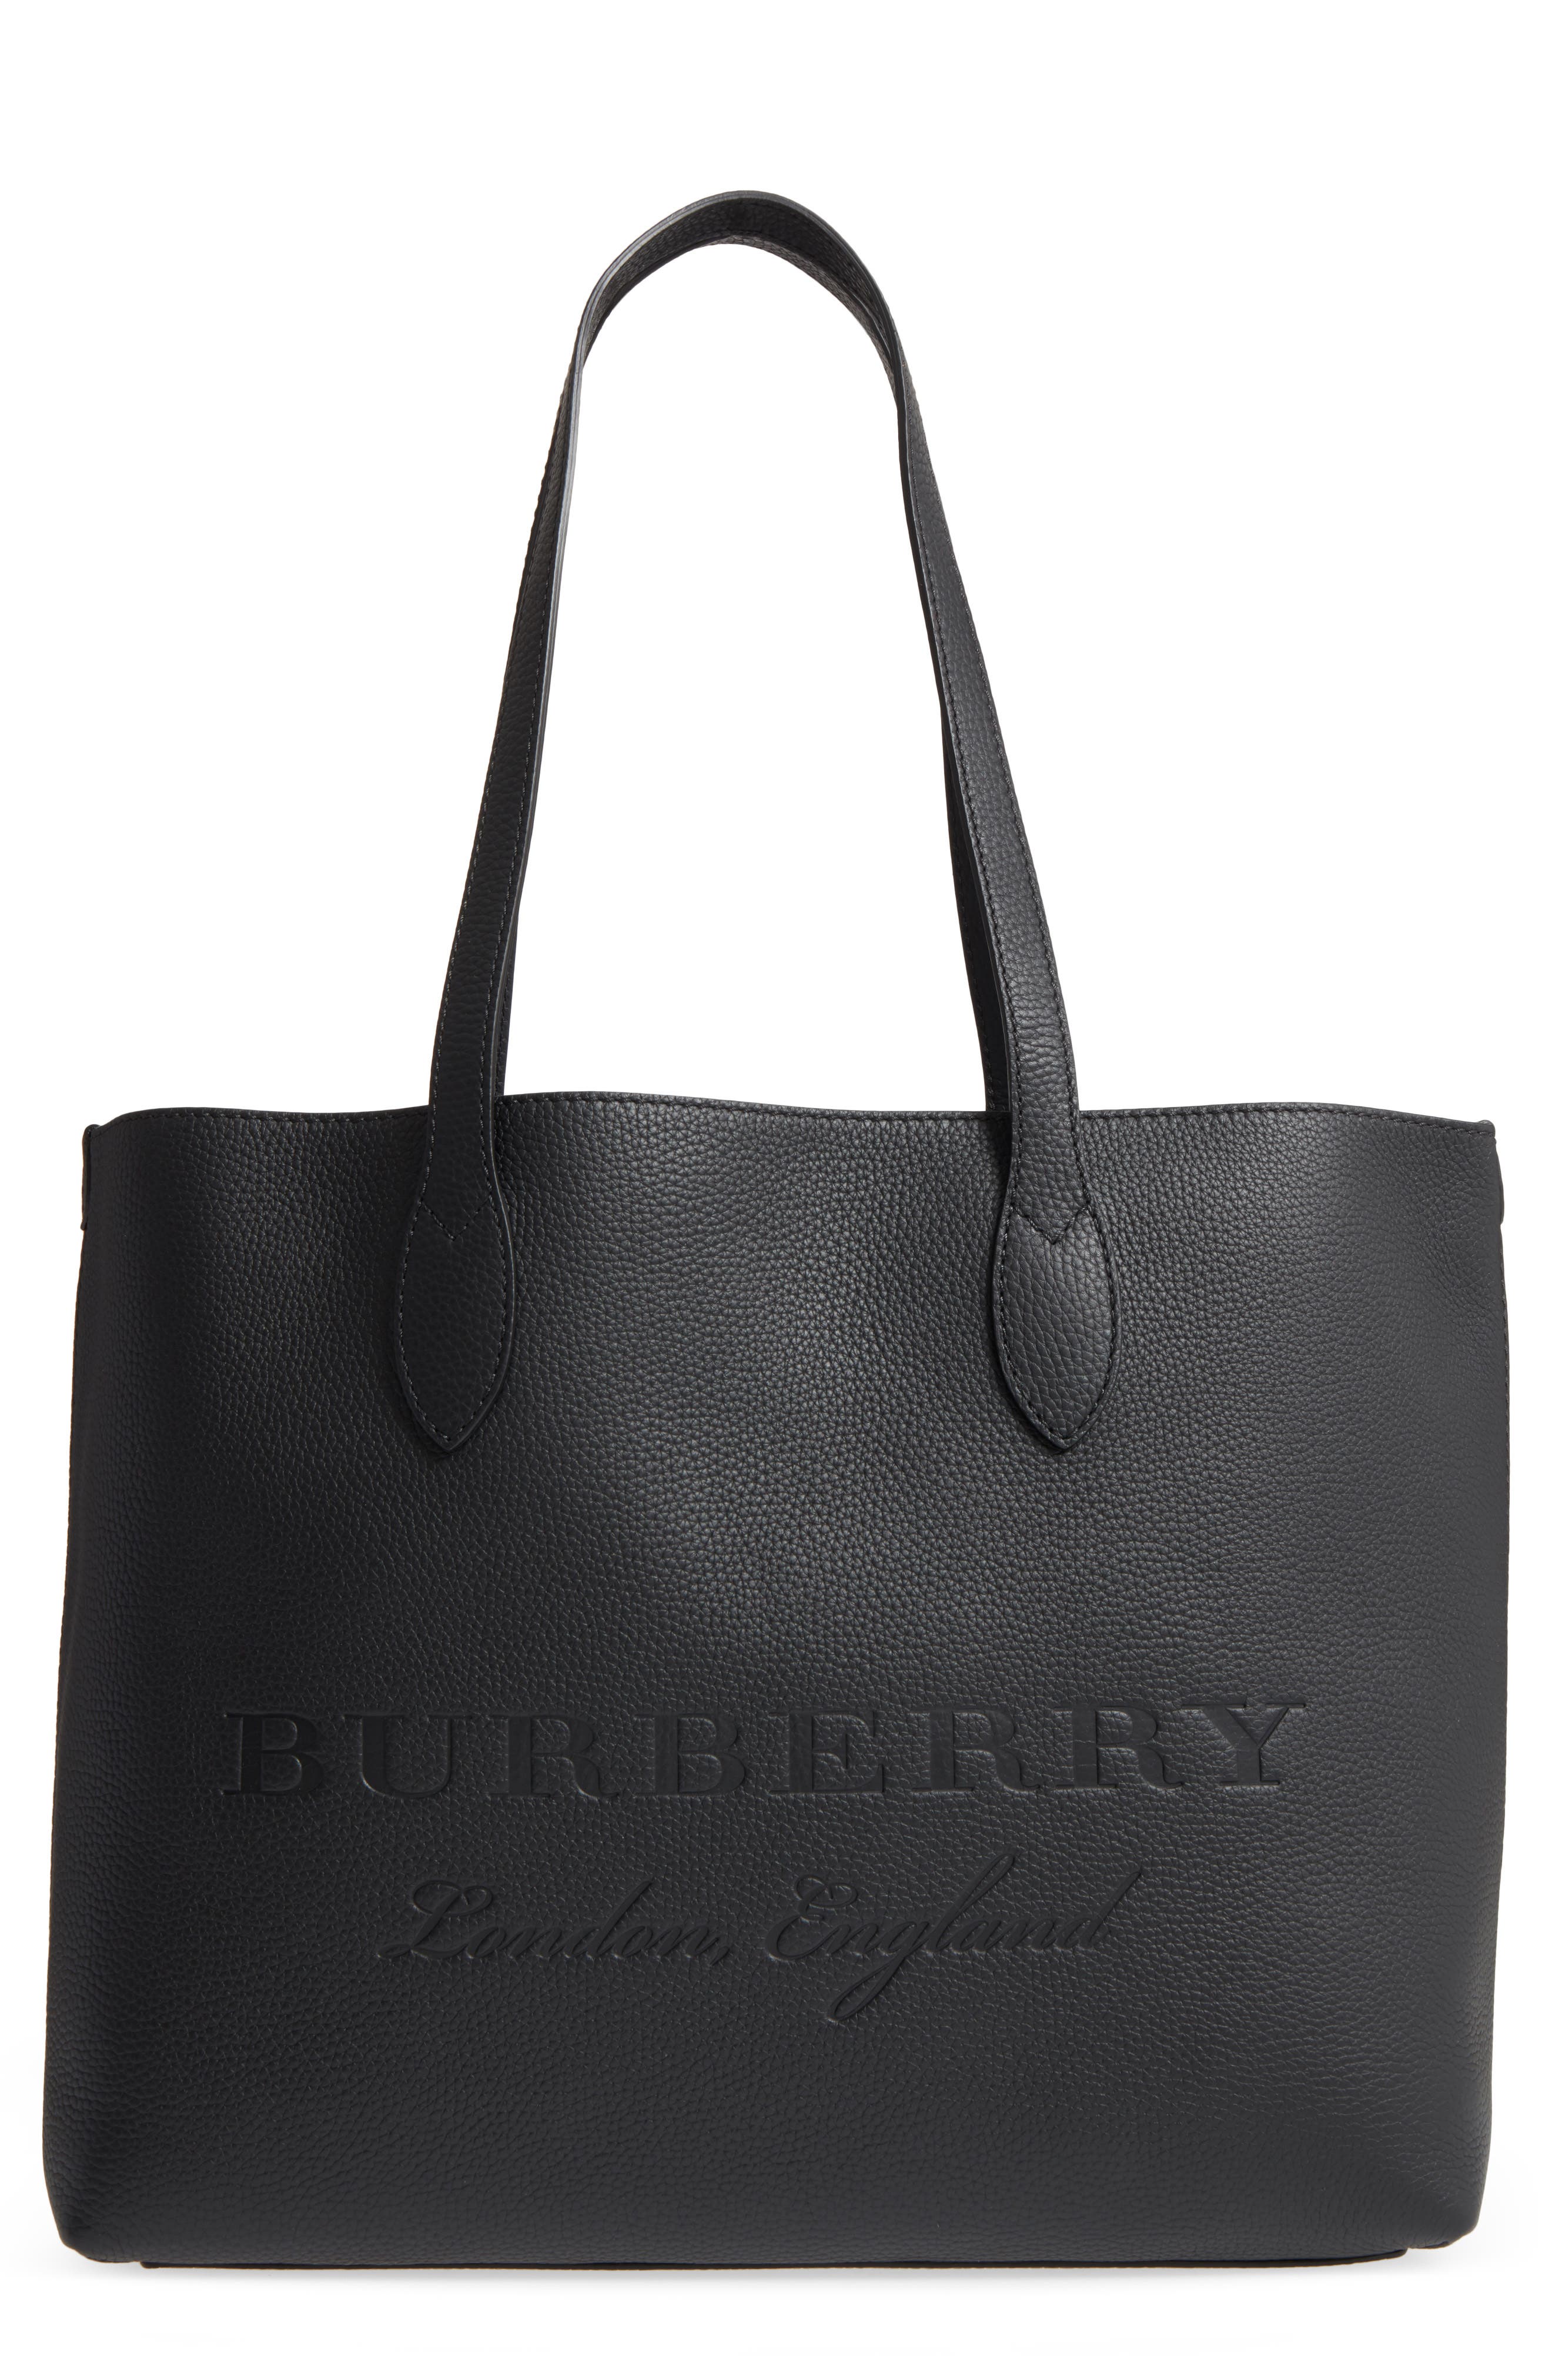 burberry handbags nordstrom